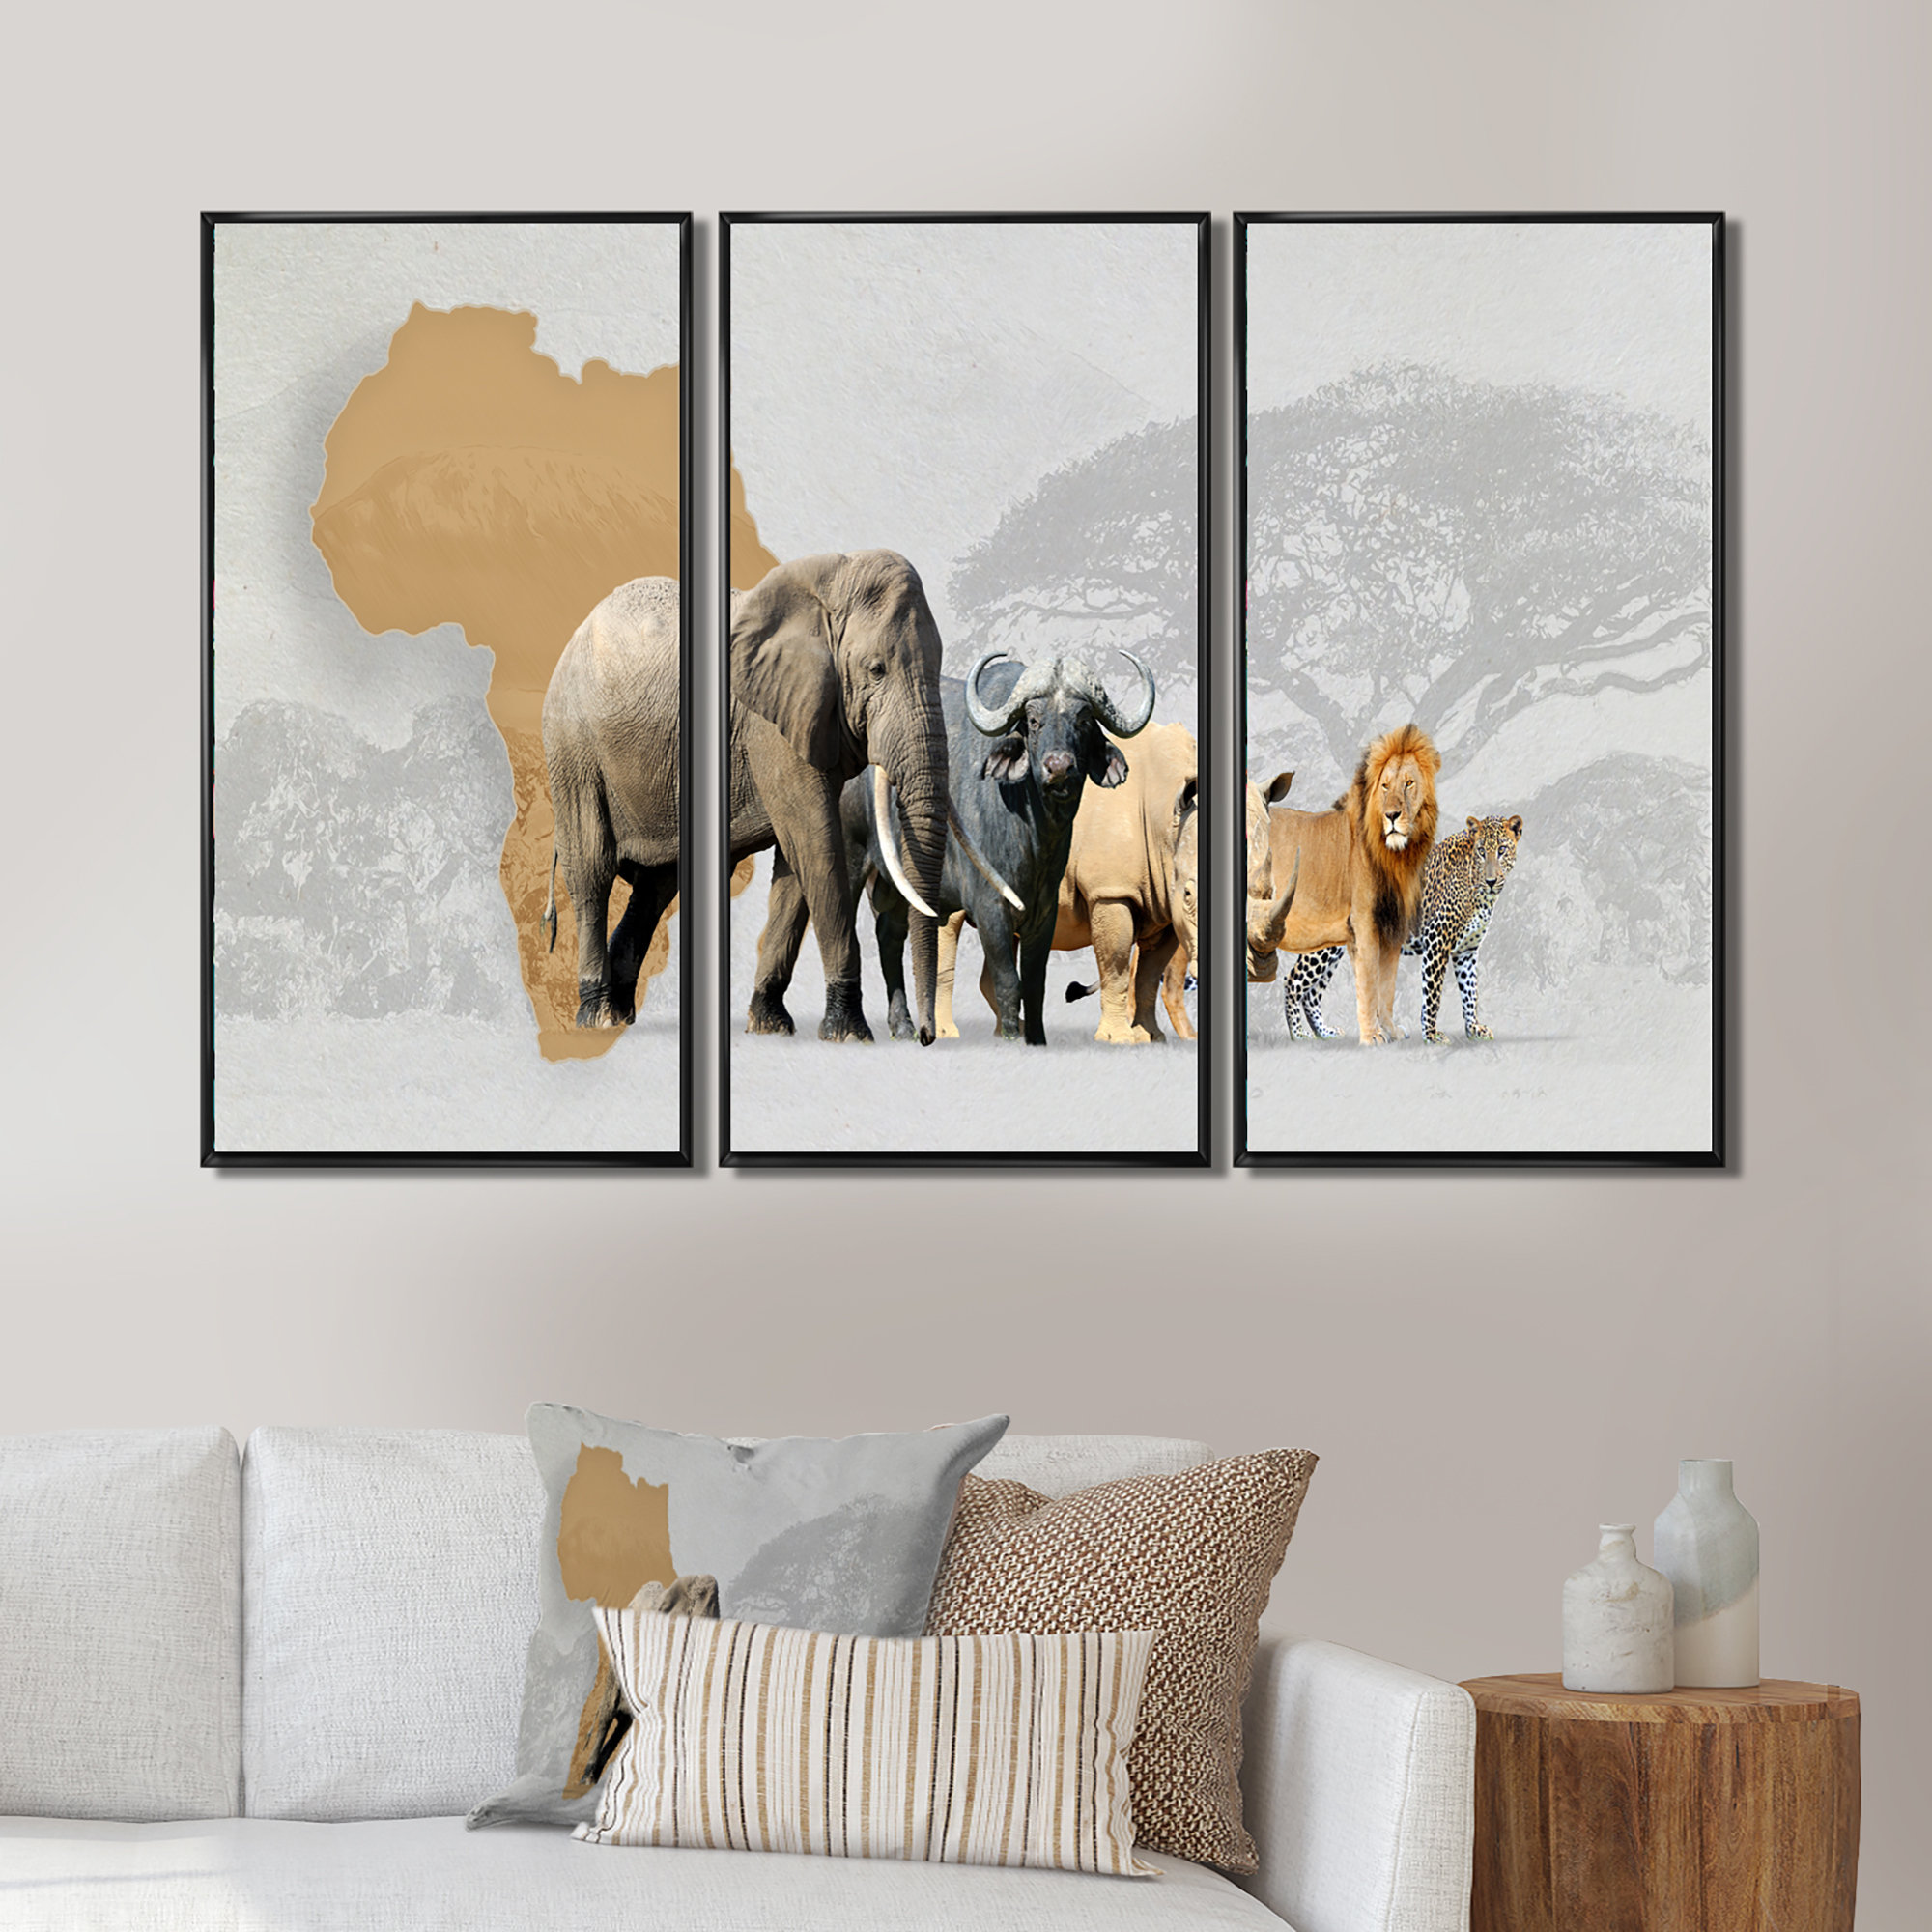 Elephant Stock Fishing Poles On Canvas 3 Pieces Set